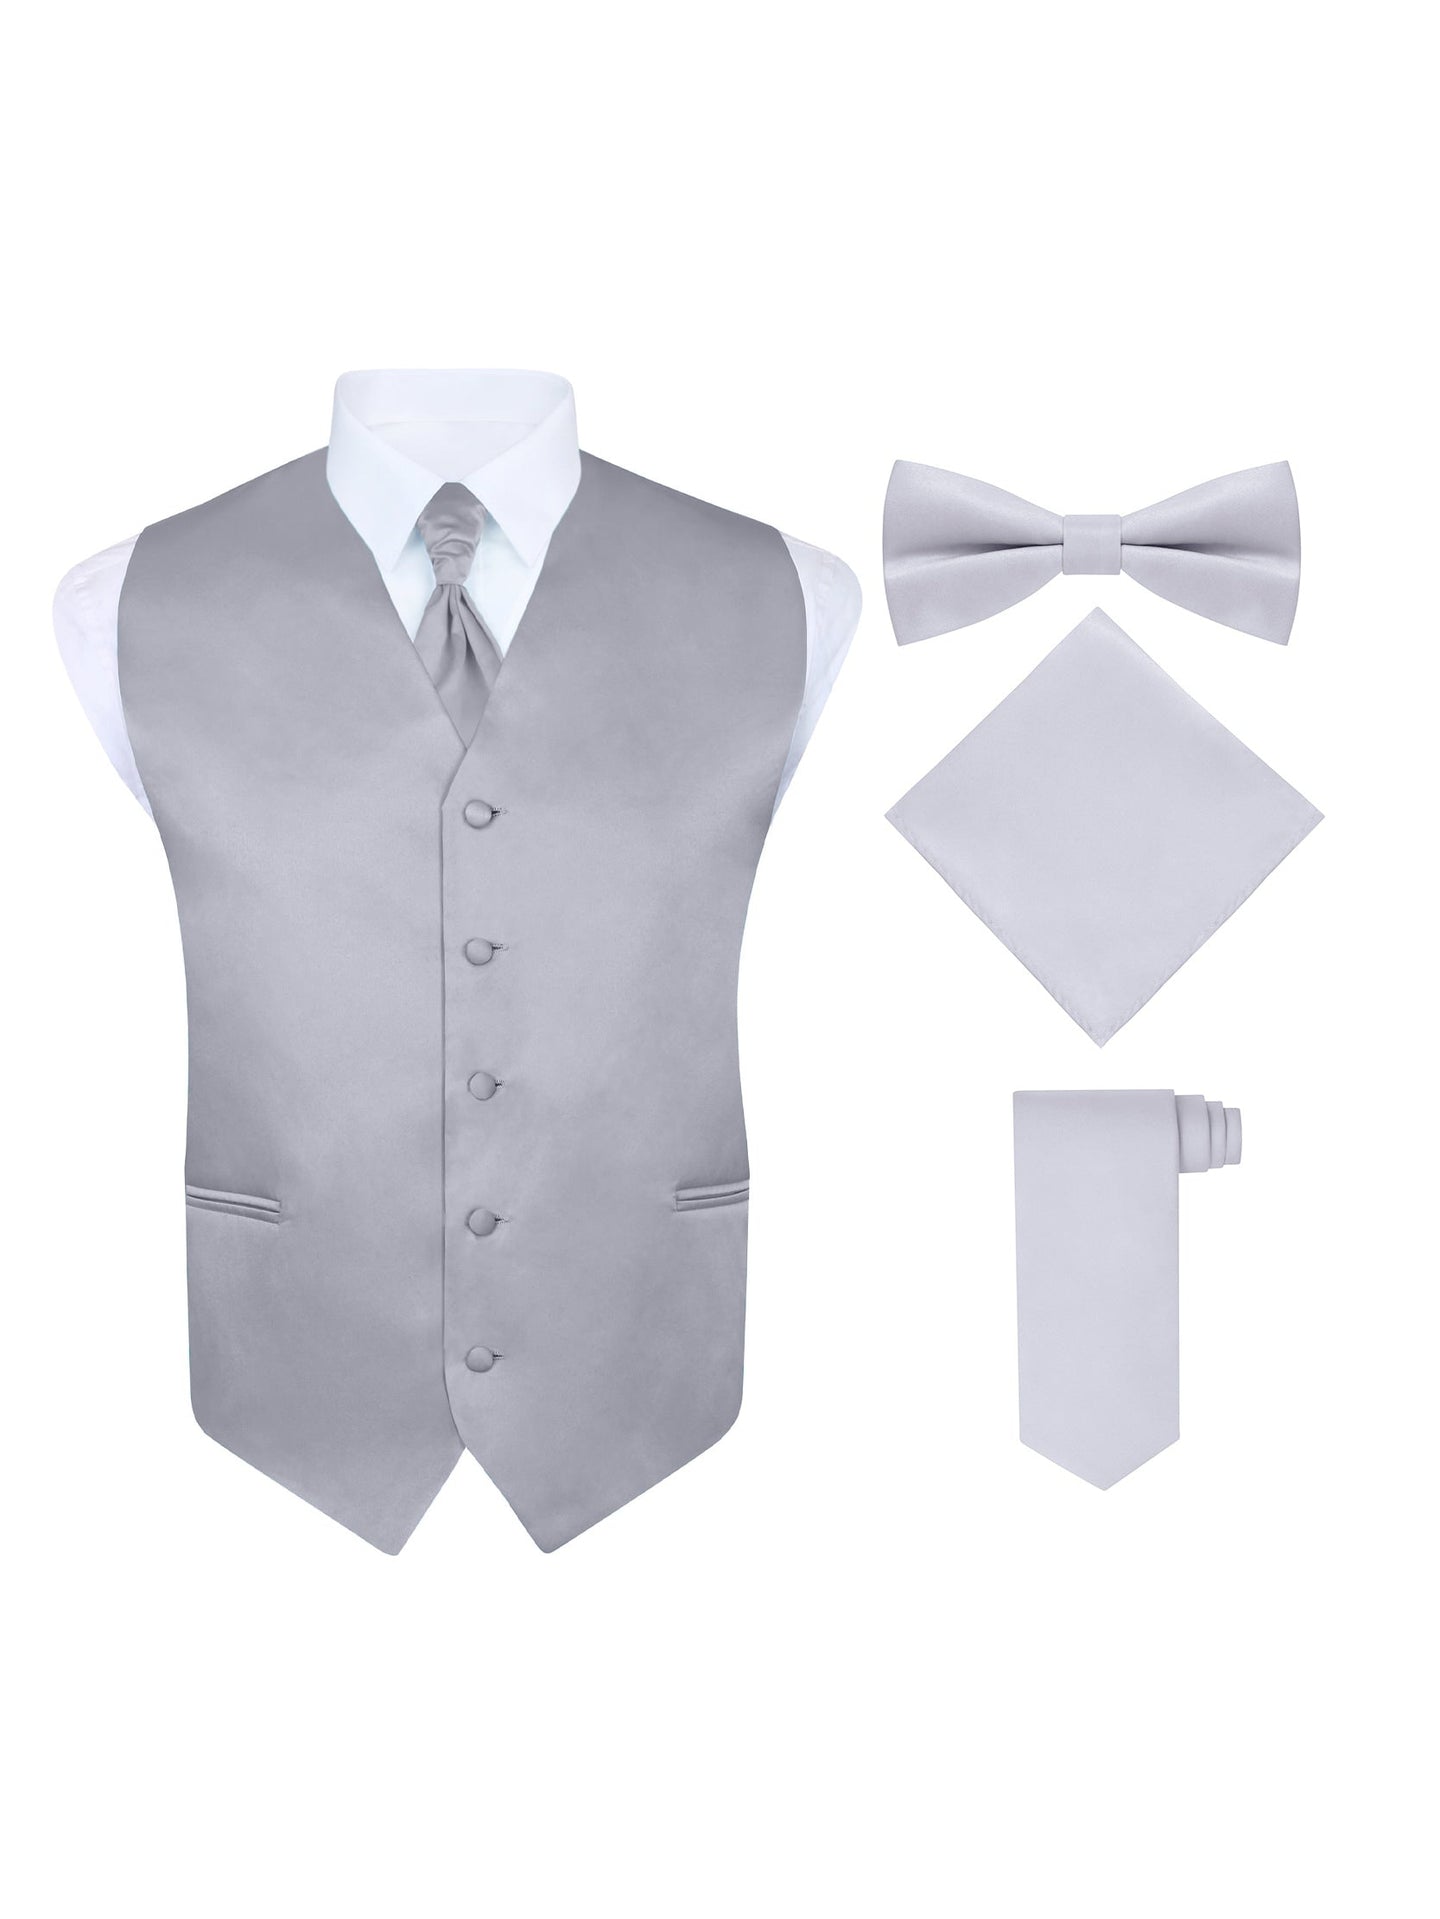 S.H. Churchill & Co. Men's 5 Piece Vest Set, with Sharpei, Bow Tie, Neck Tie & Pocket Hanky-Silver